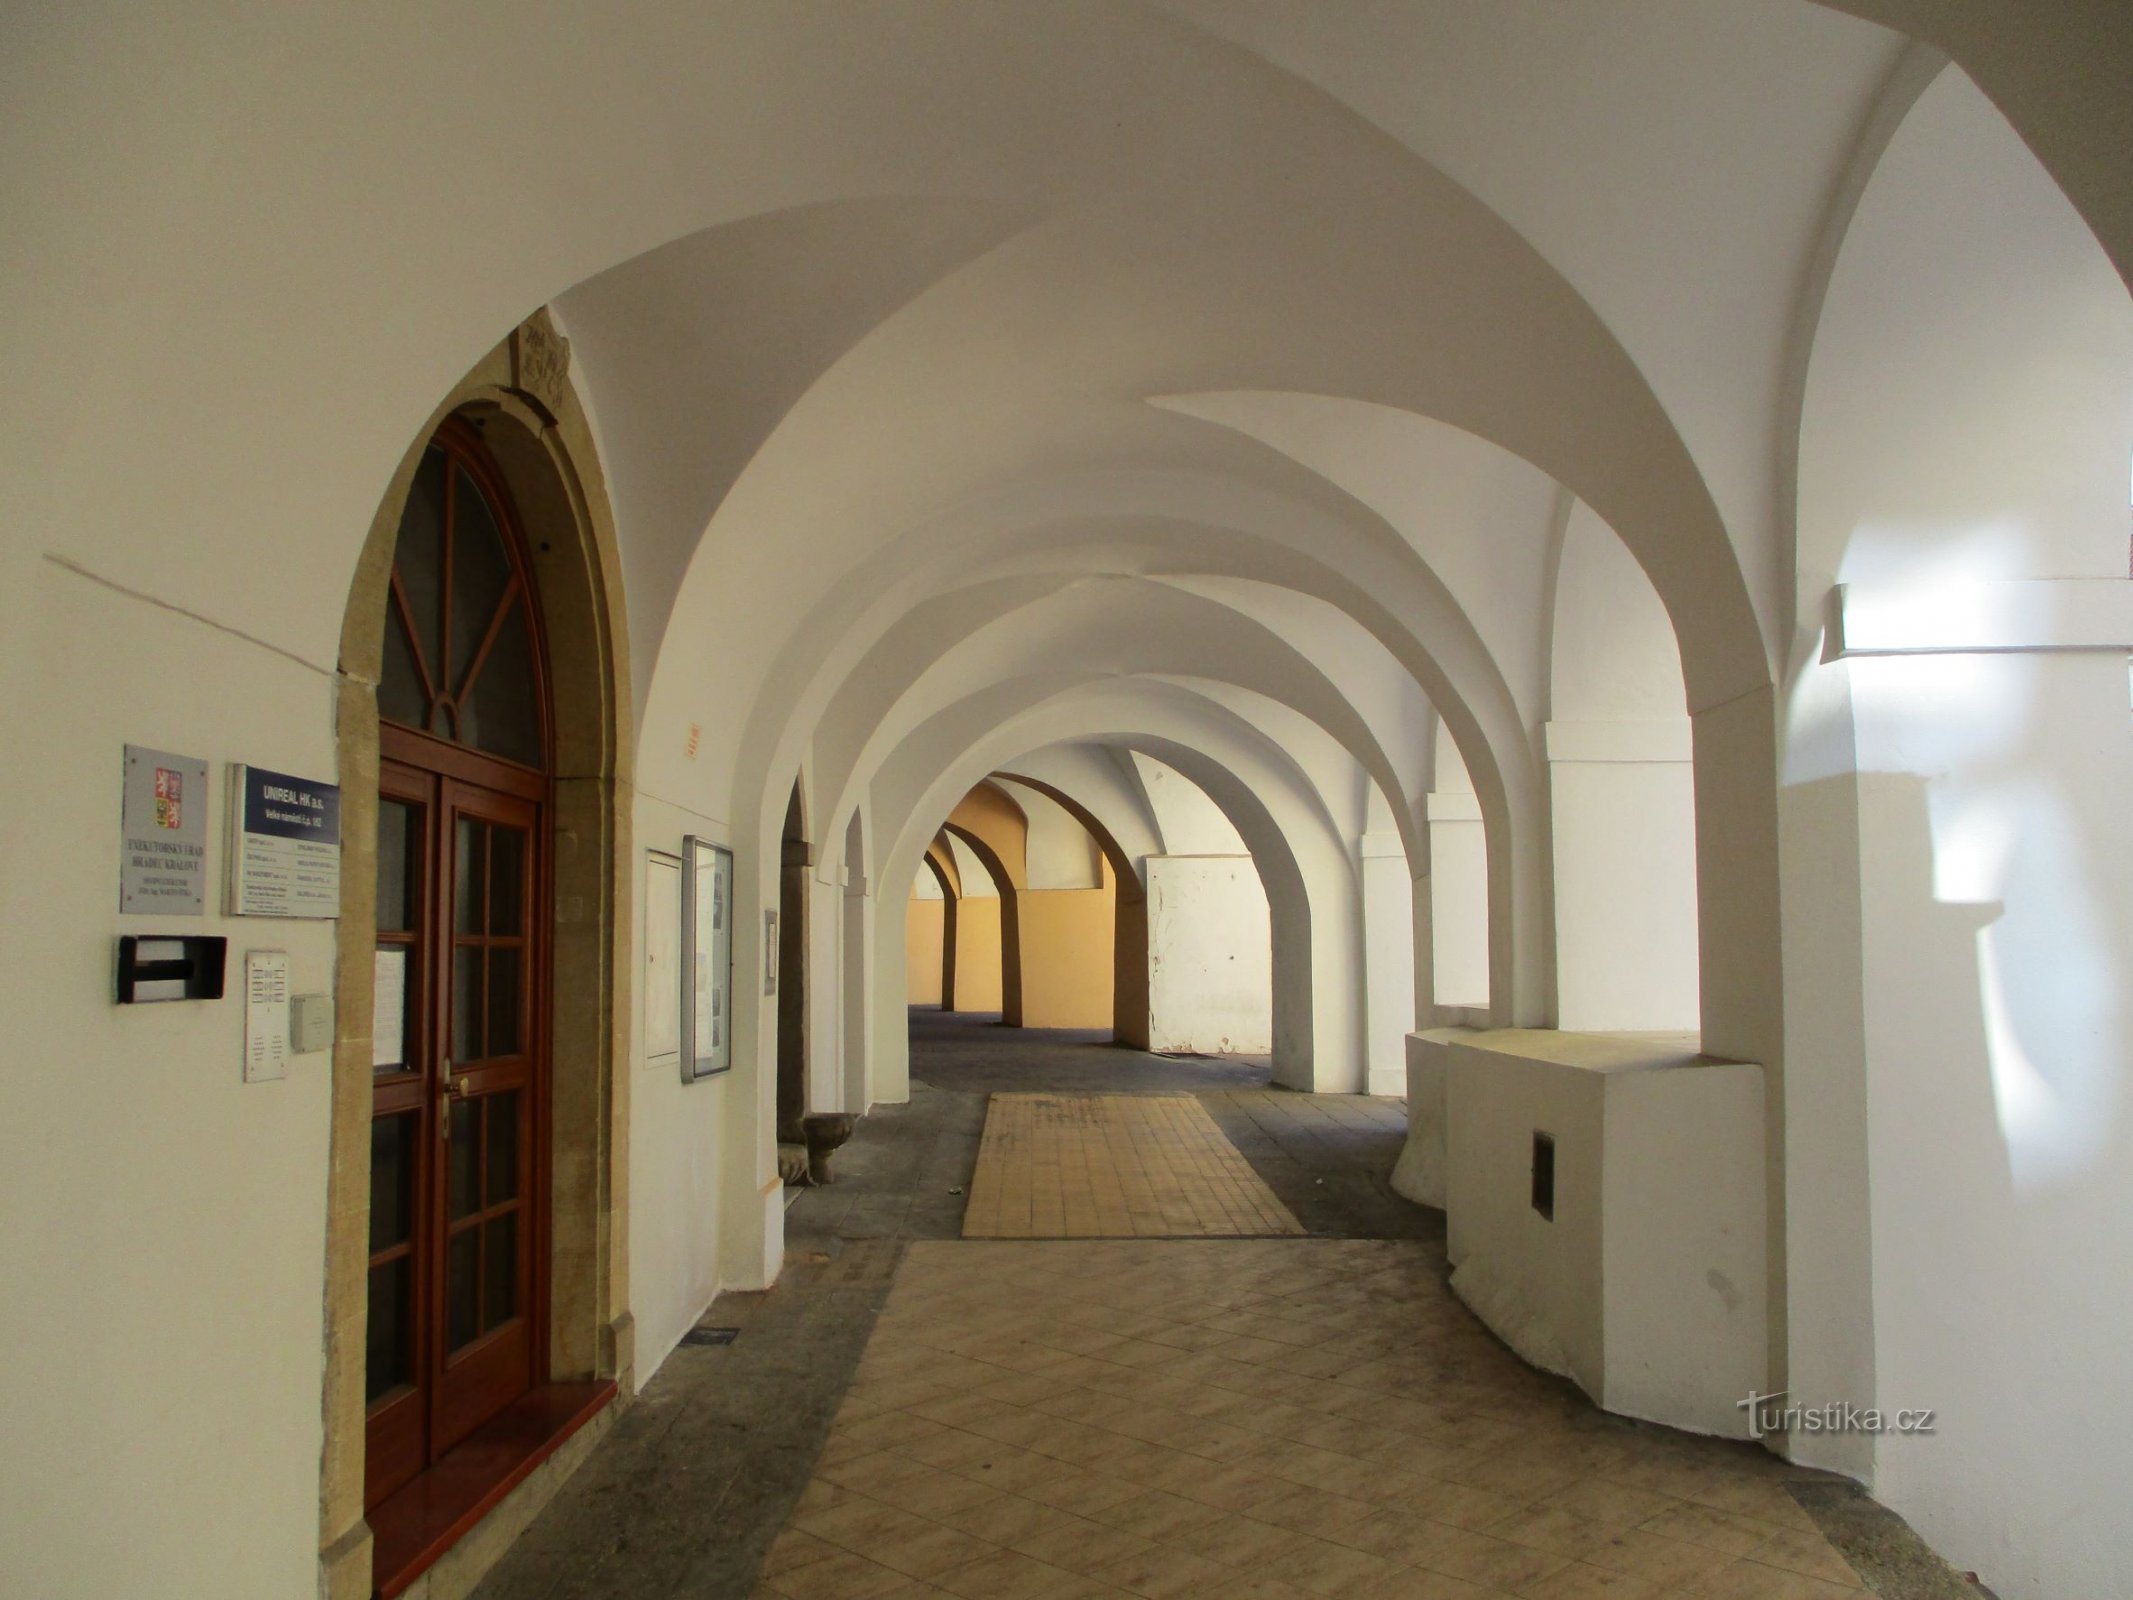 Great hall from No. 162 (Hradec Králové, 25.4.2020/XNUMX/XNUMX)